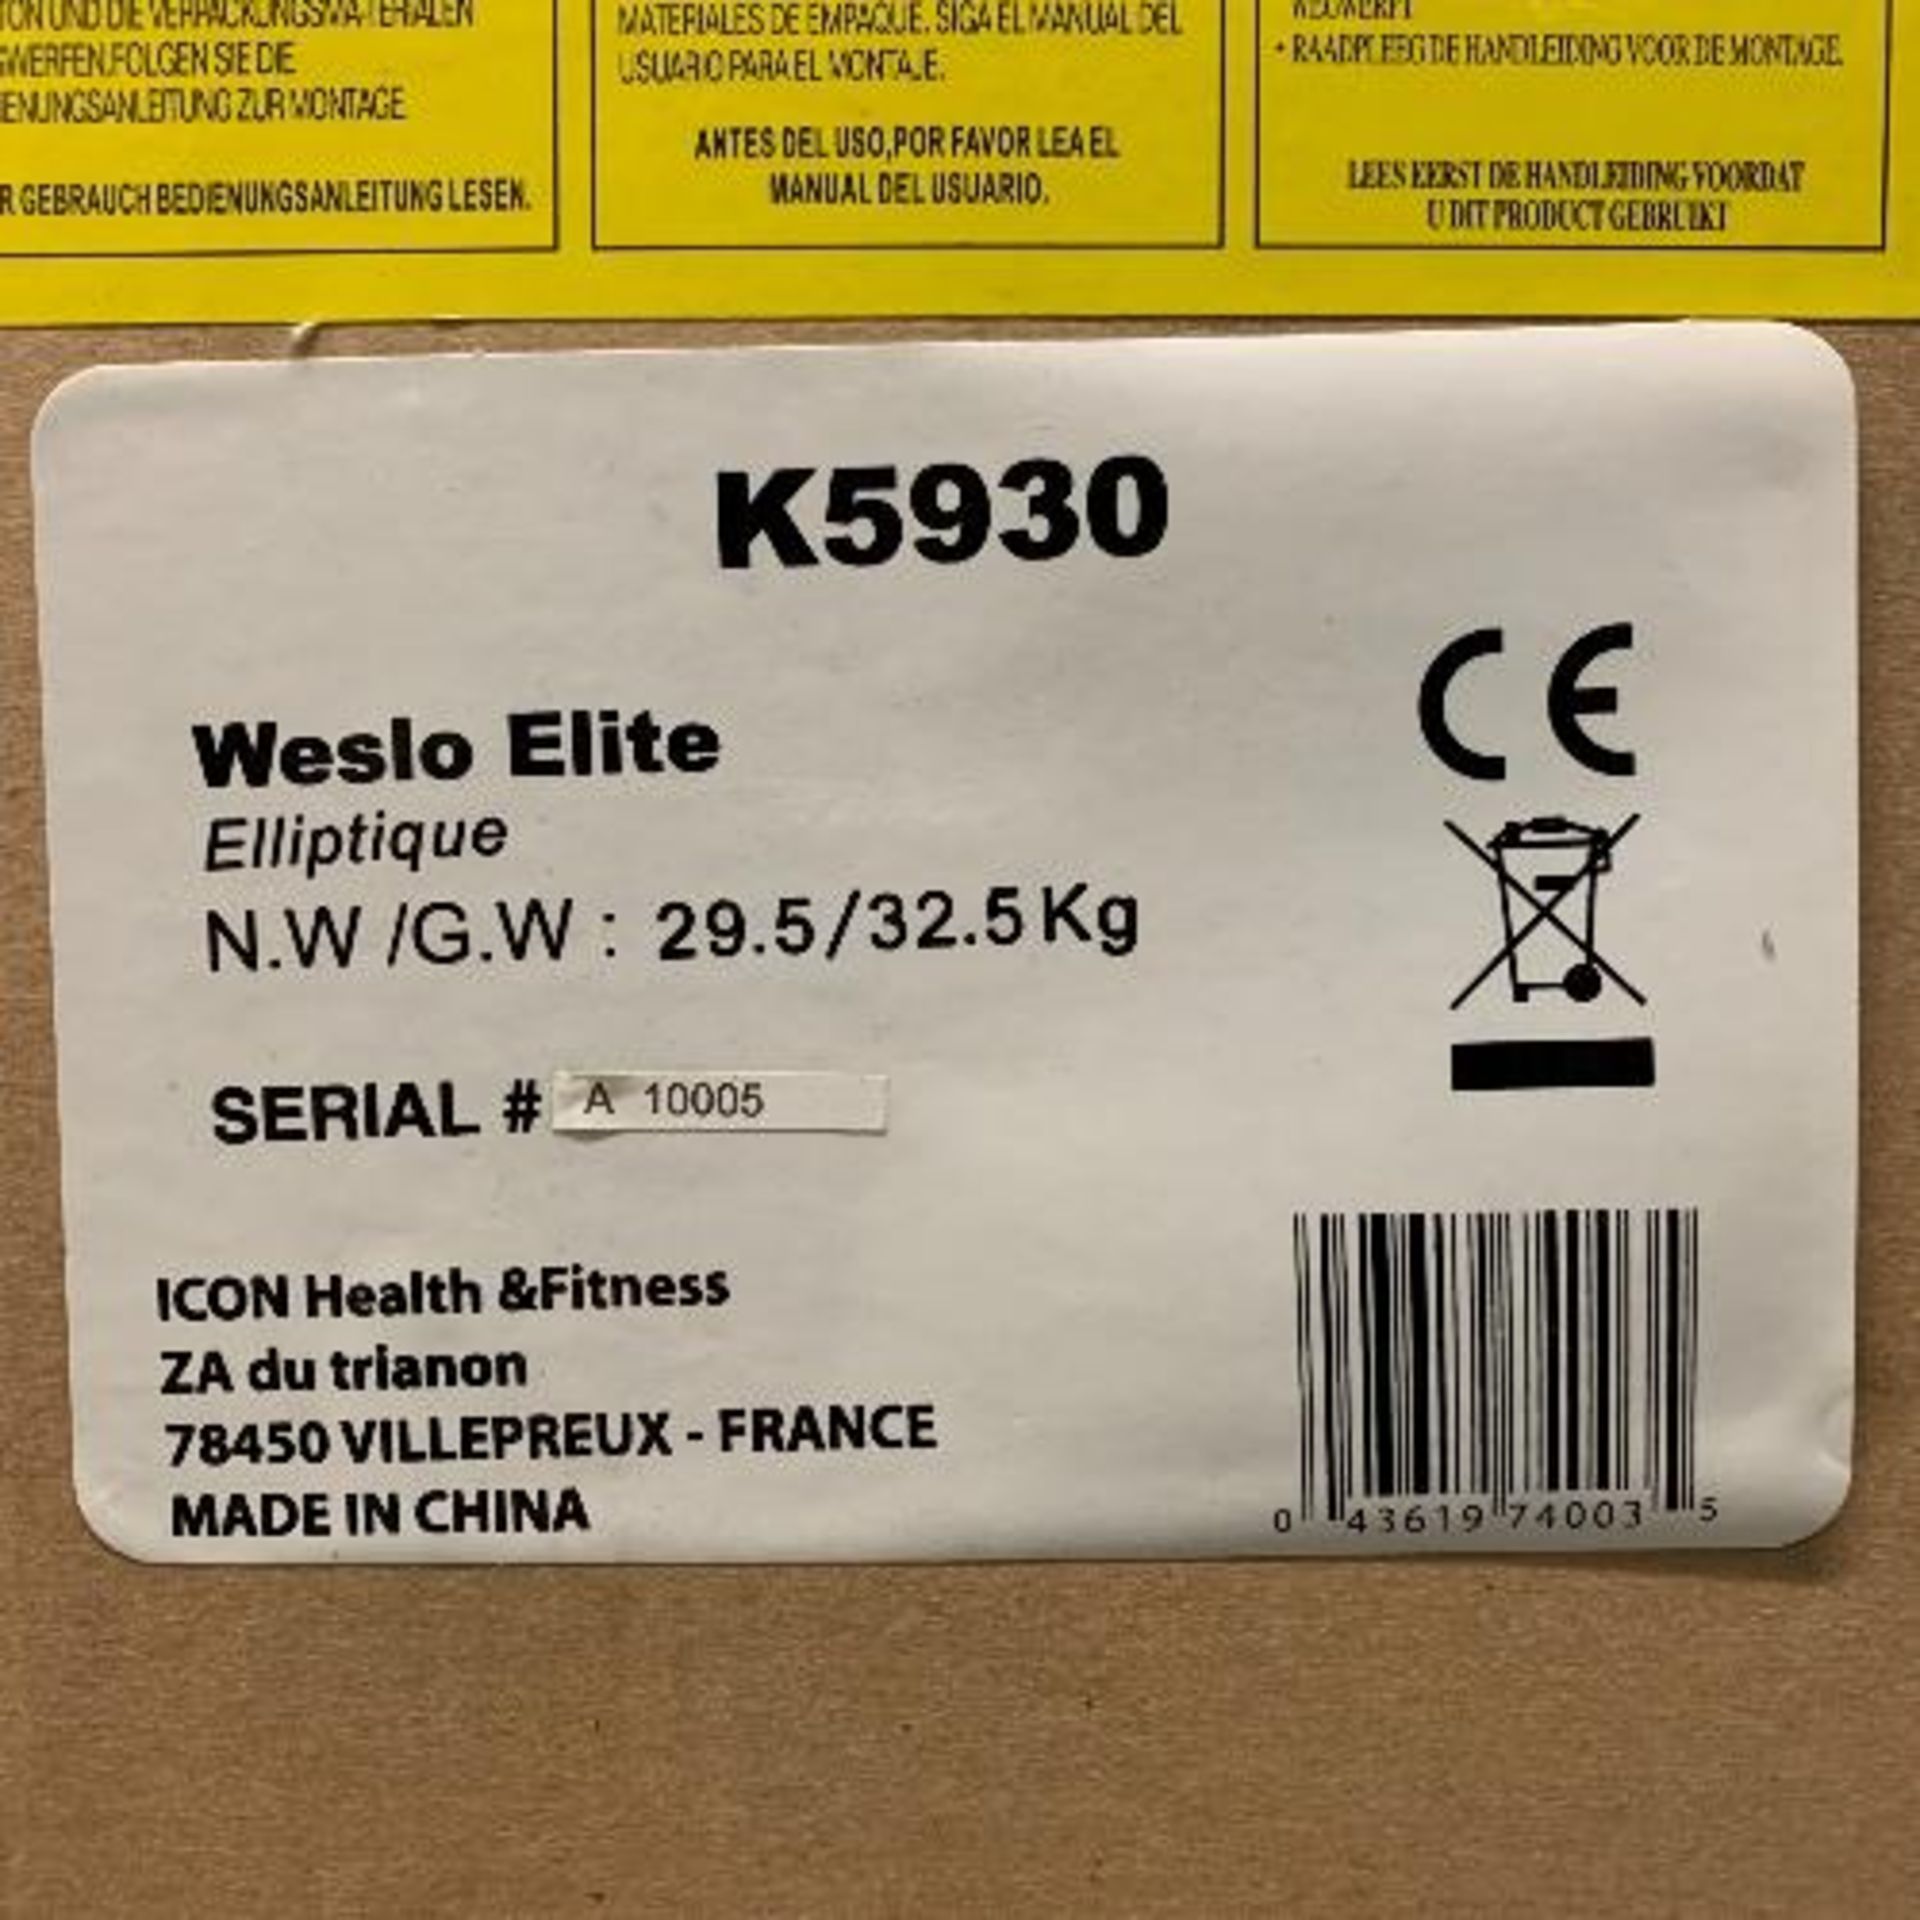 Weslo Easy Fit K5930 exercise bike - Image 2 of 2